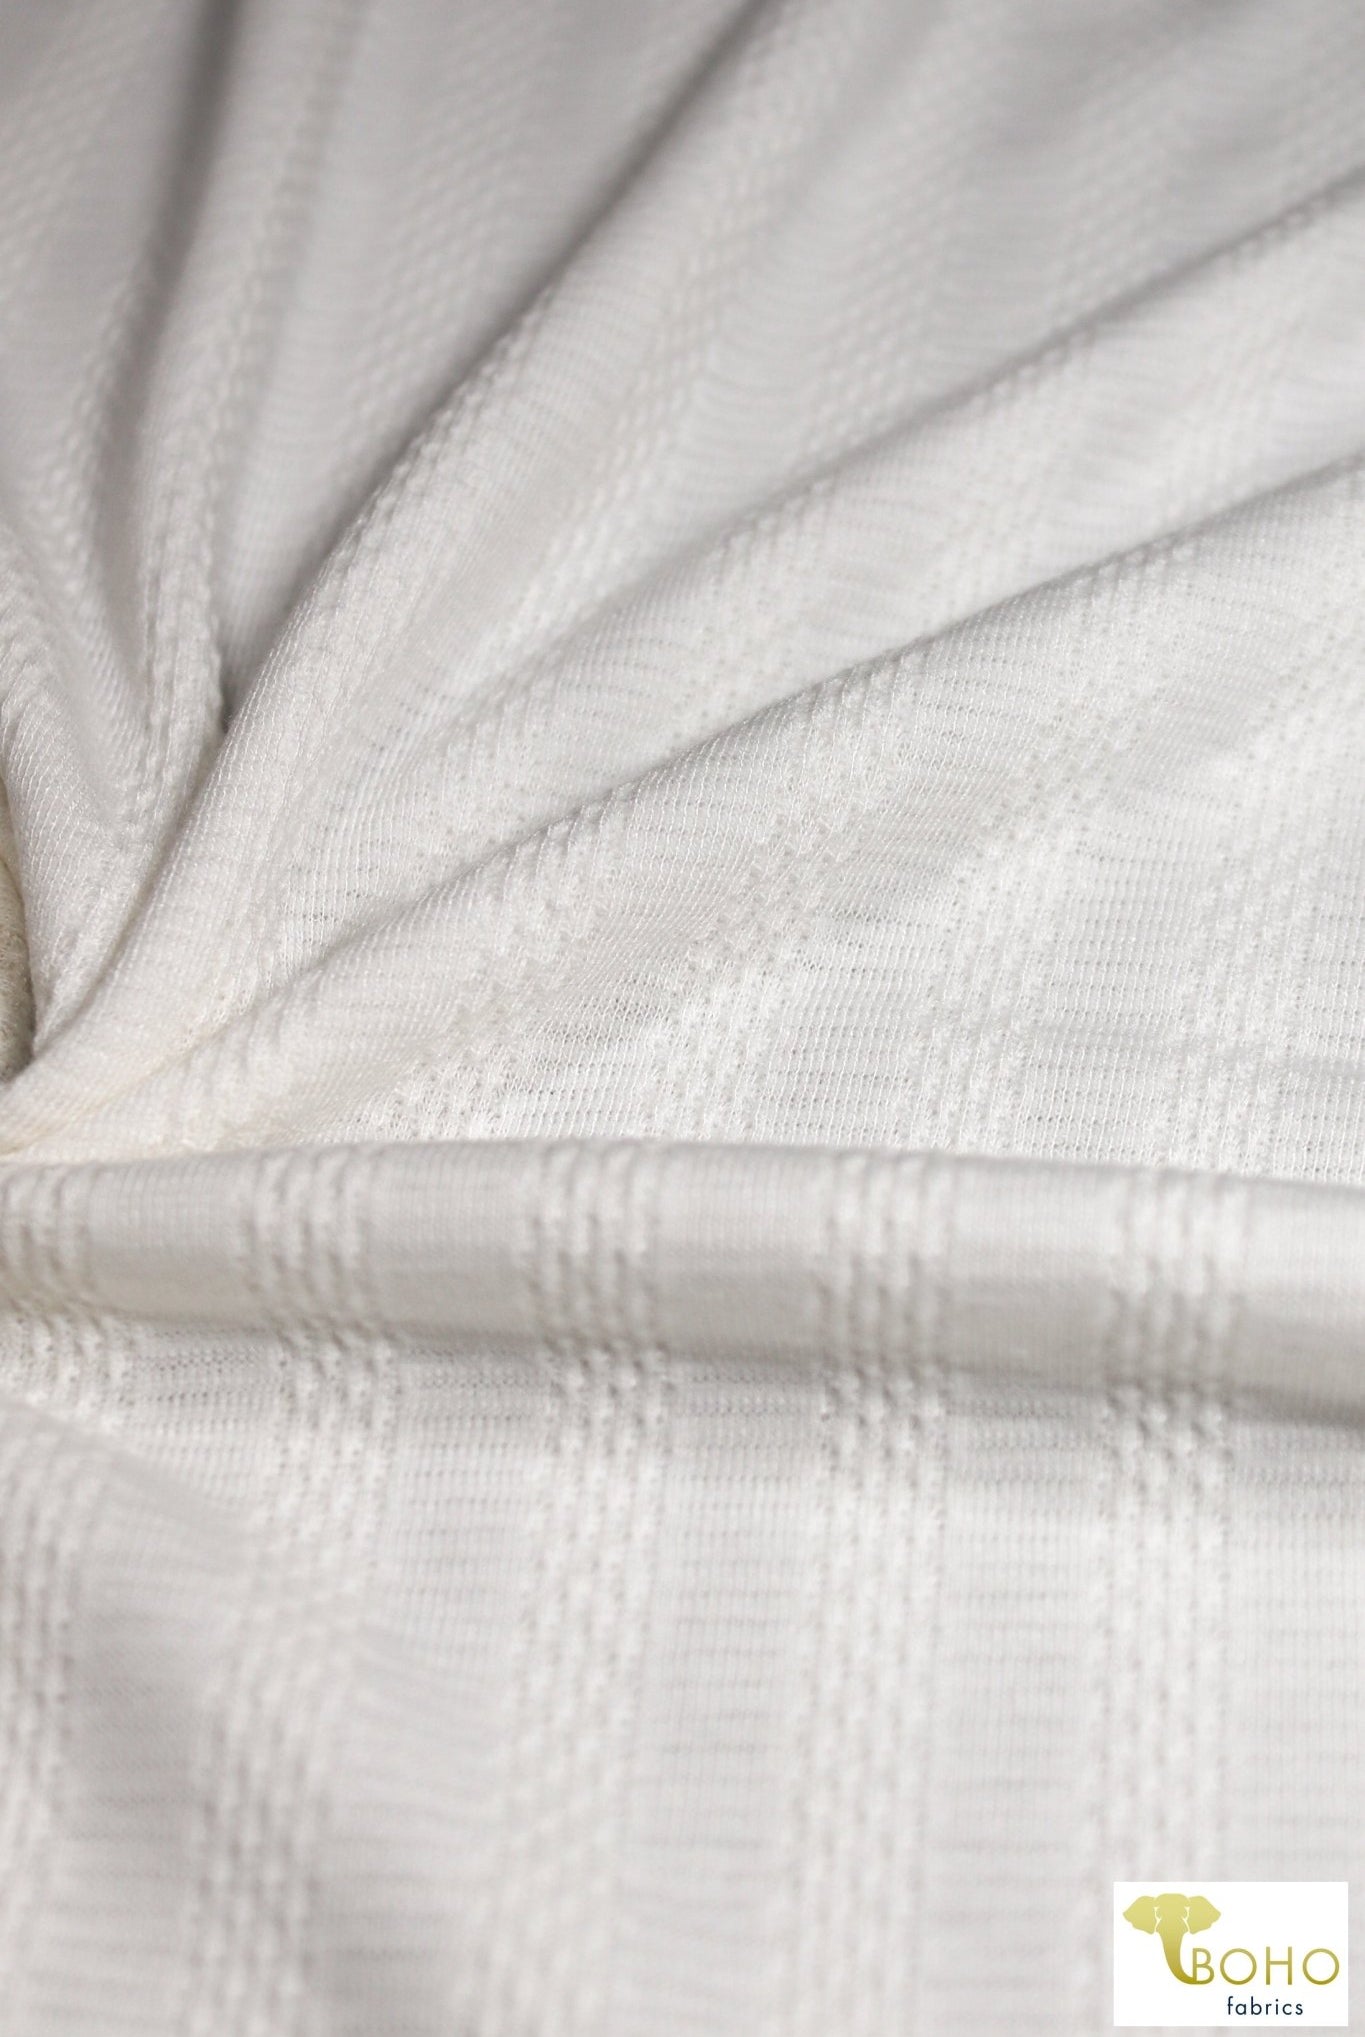 Stitched Stripes in White, Pointelle Rib Knit. RIB-129-WHT - Boho Fabrics